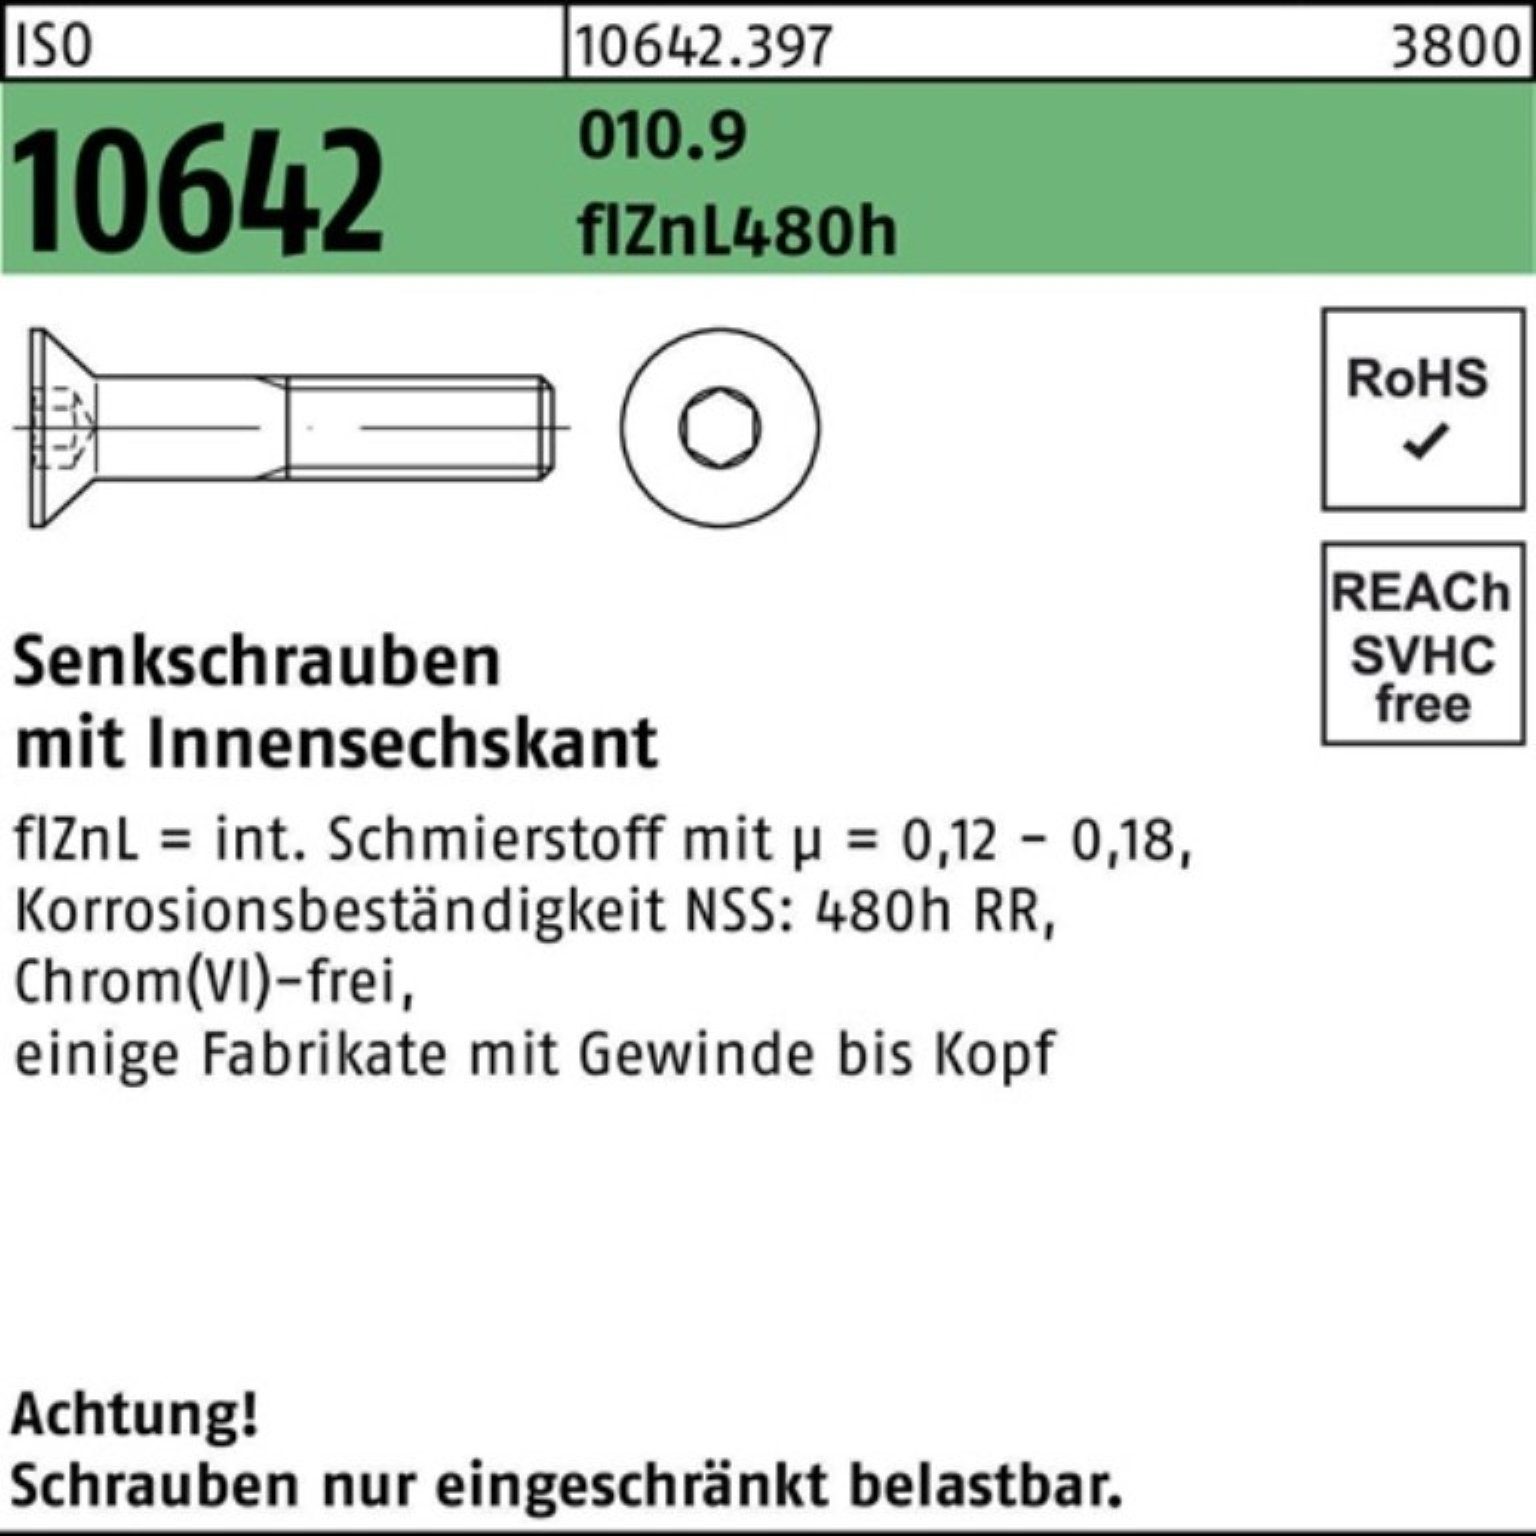 Reyher Senkschraube 200er Pack Senkschraube ISO 10642 Innen-6kt M8x35 010.9 flZnL 480h zin